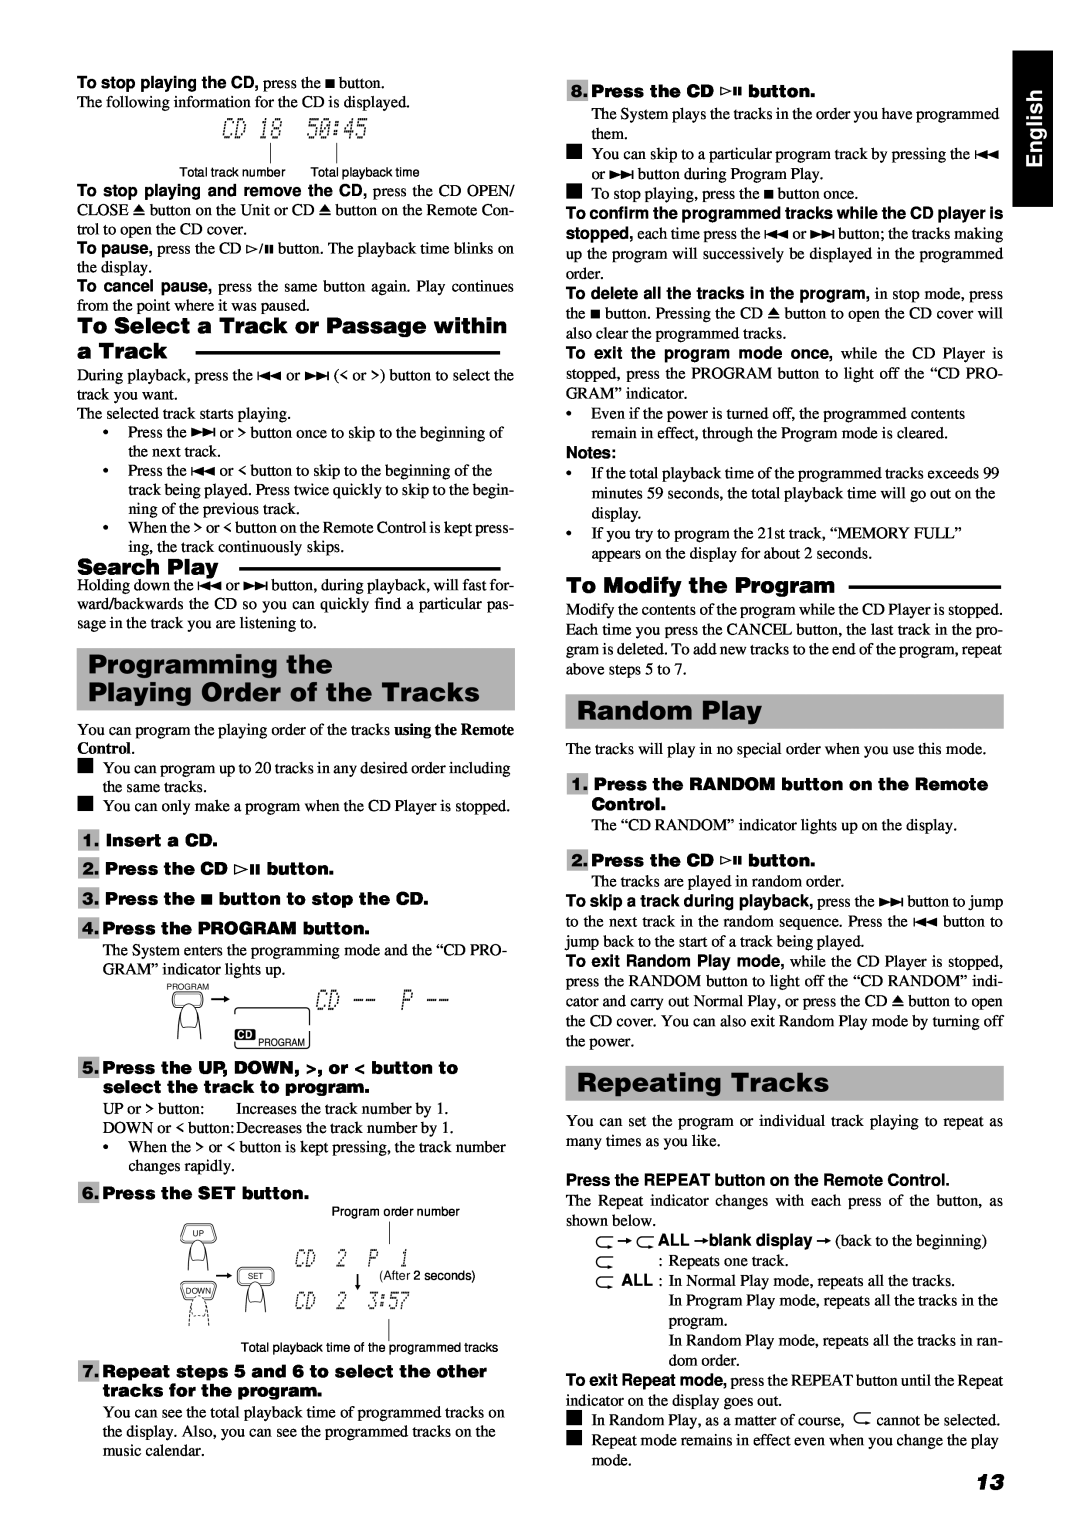 JVC RM-RXUV9RMD manual Programming the Playing Order of the Tracks, Random Play, Repeating Tracks, Search Play, English 